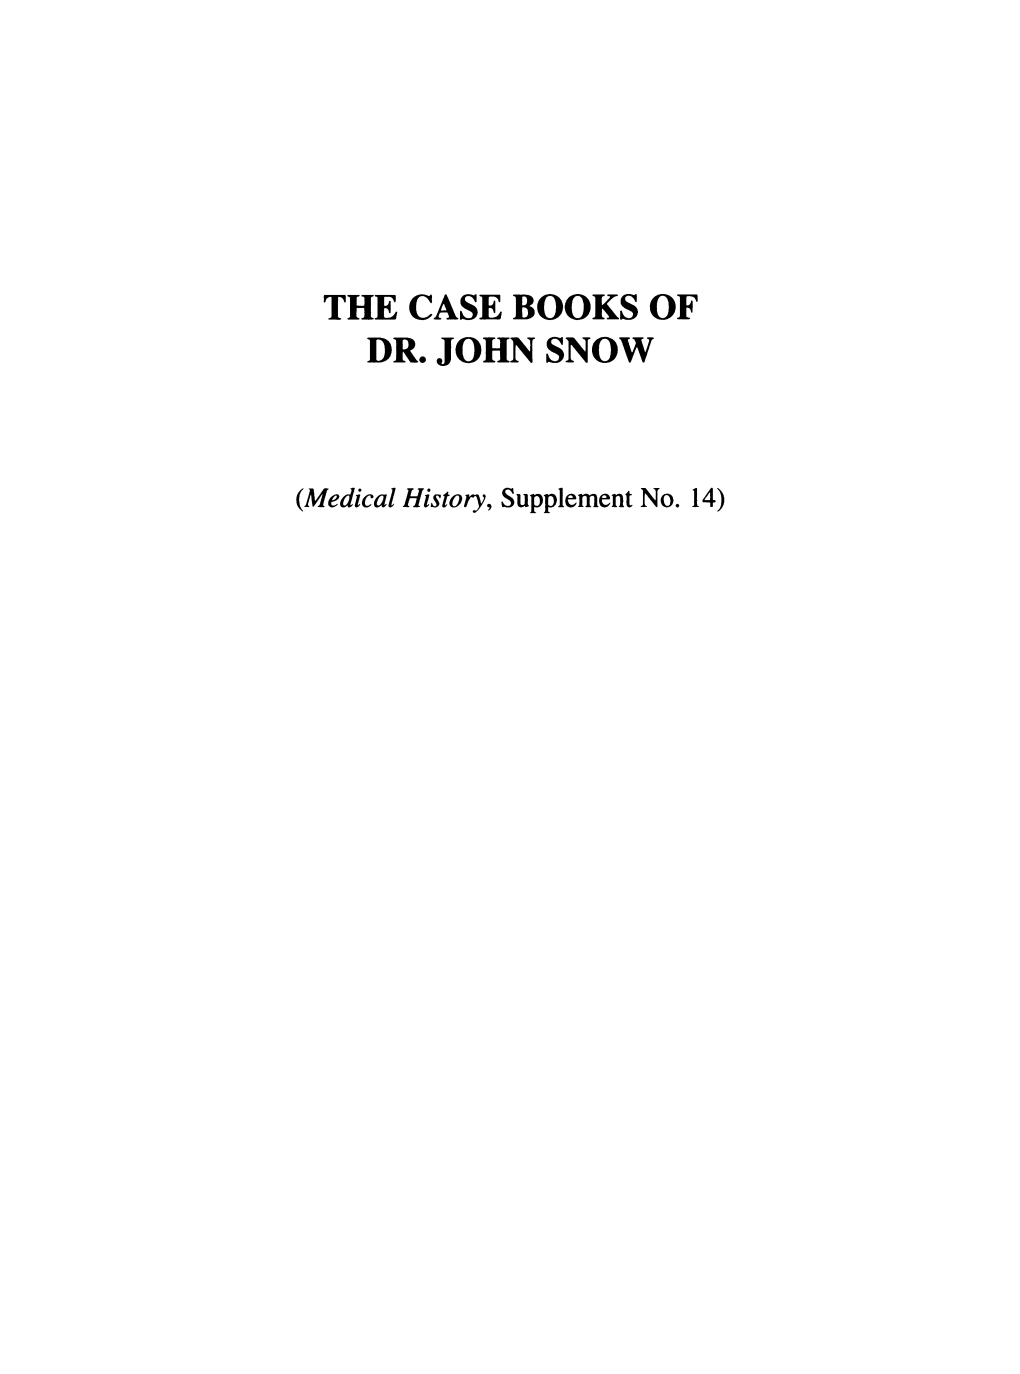 The Case Books of Dr. John Snow